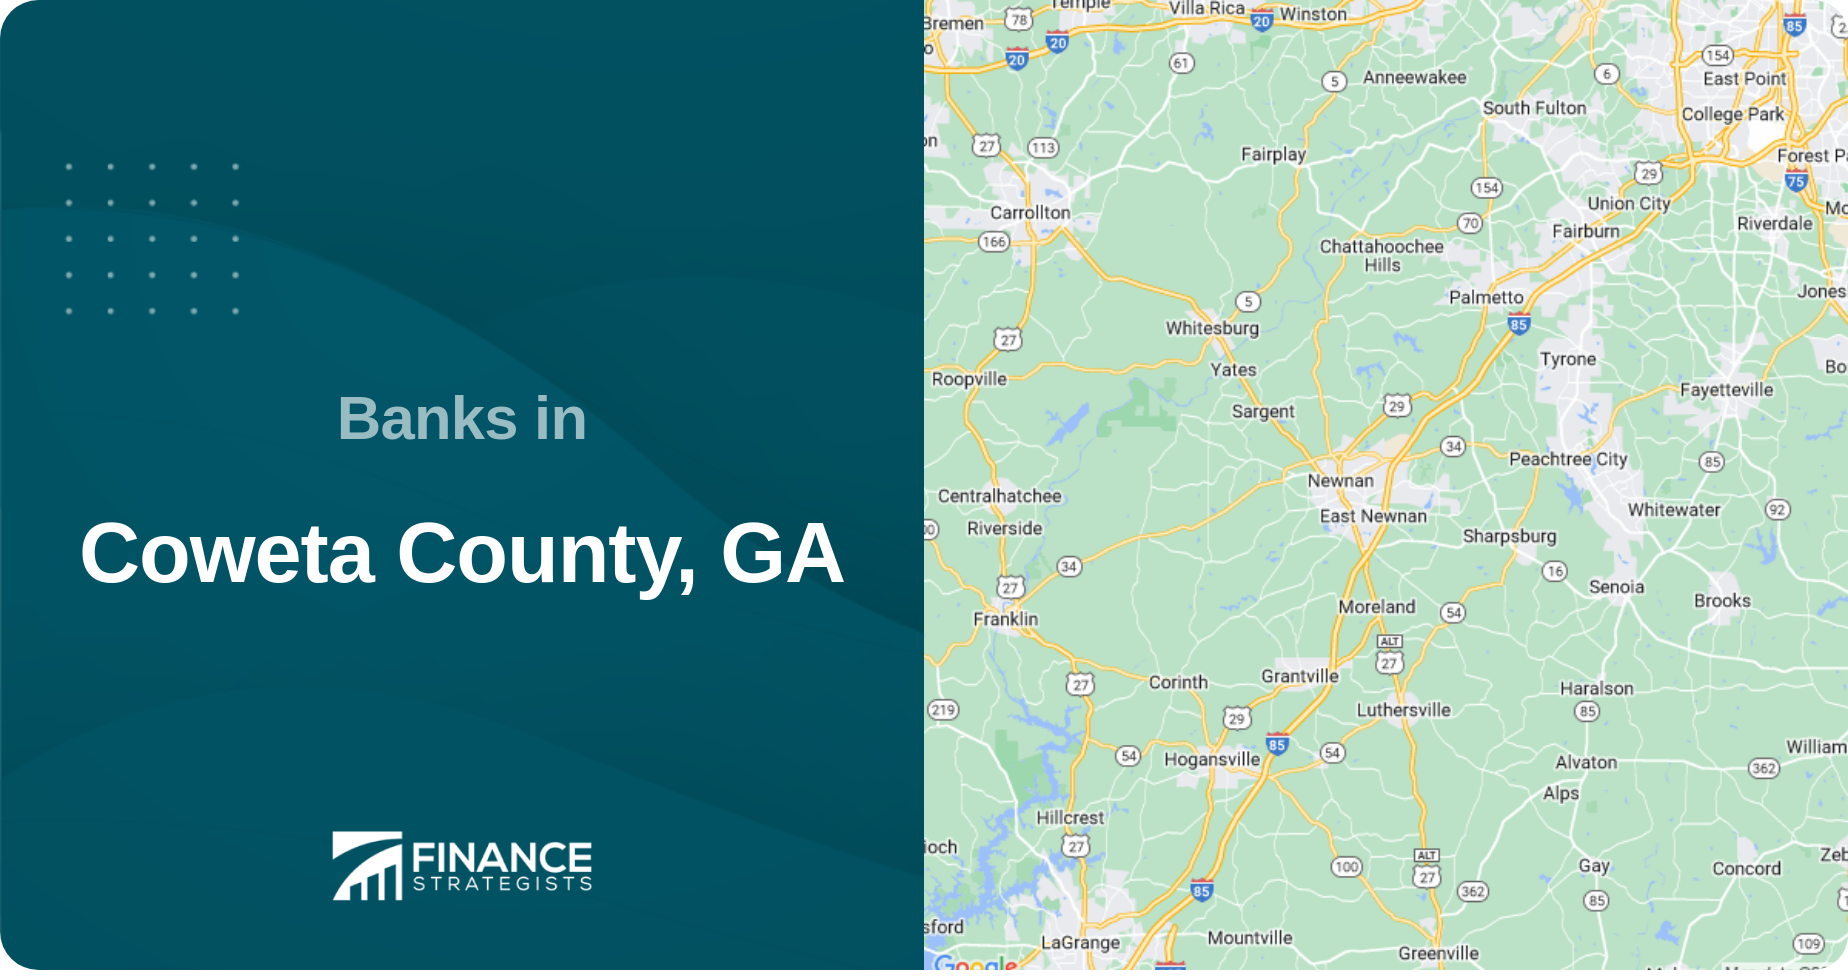 Banks in Coweta County, GA